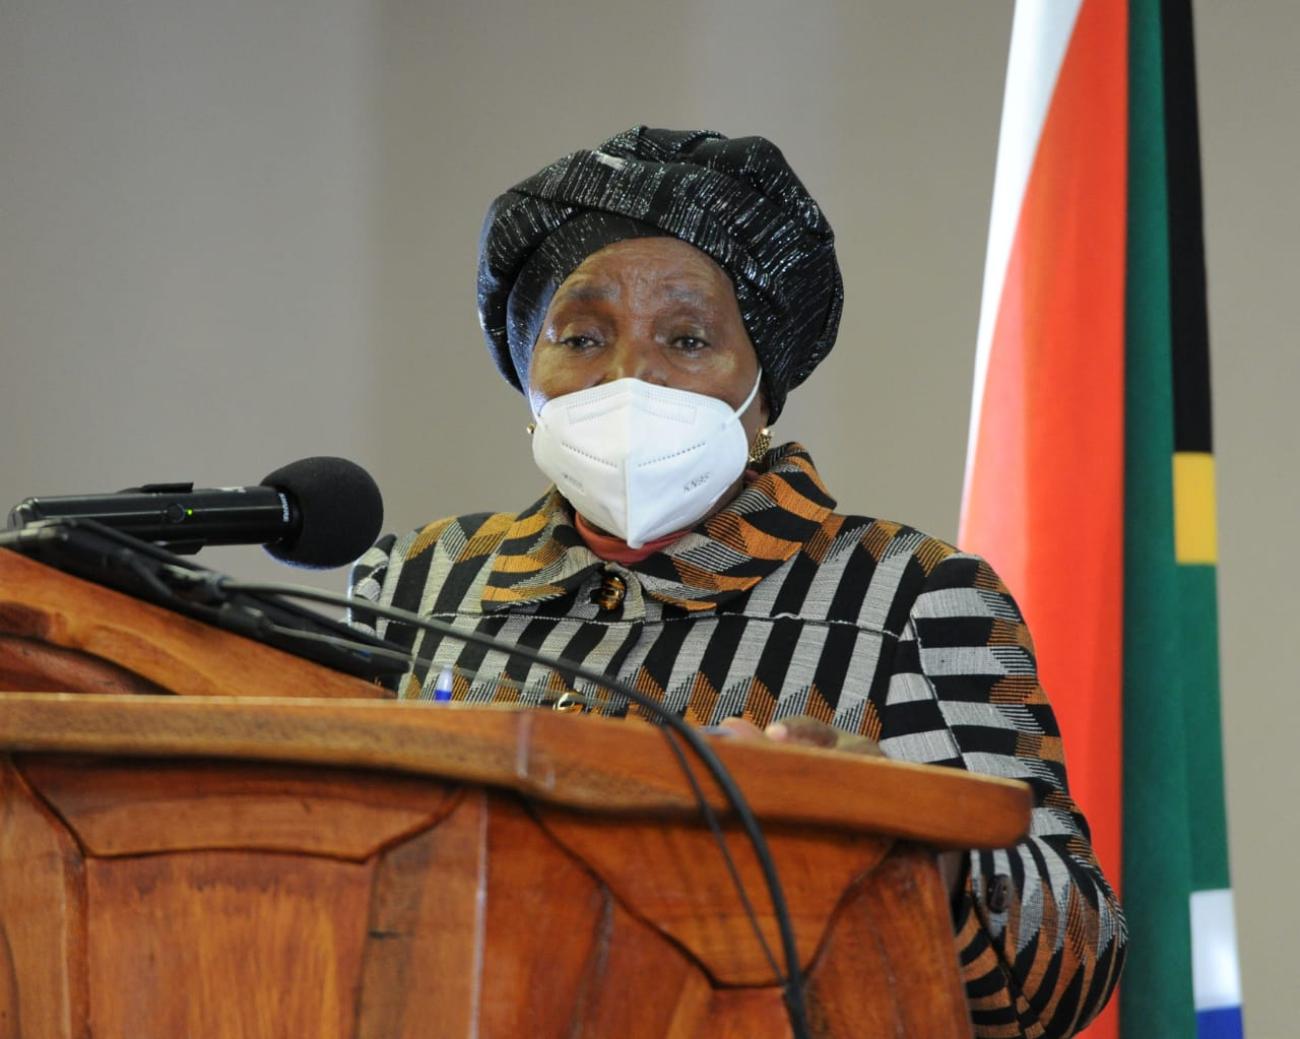  Minister for Cooperative Governance and Traditional Affairs, Dr. Nkosazana Dlamini Zuma